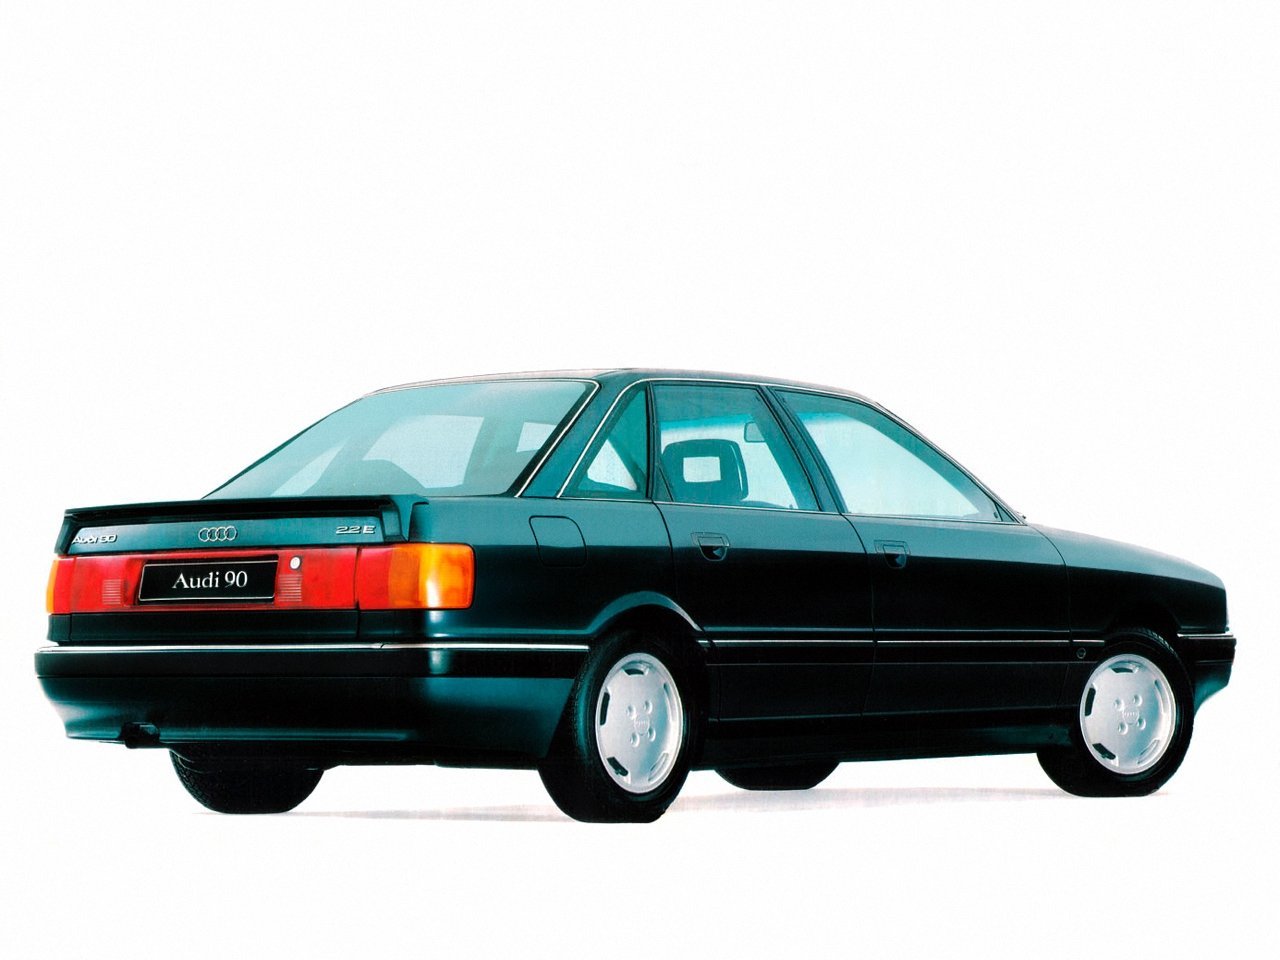 седан Audi 90 1987 - 1991г выпуска модификация 1.6 MT (80 л.с.)